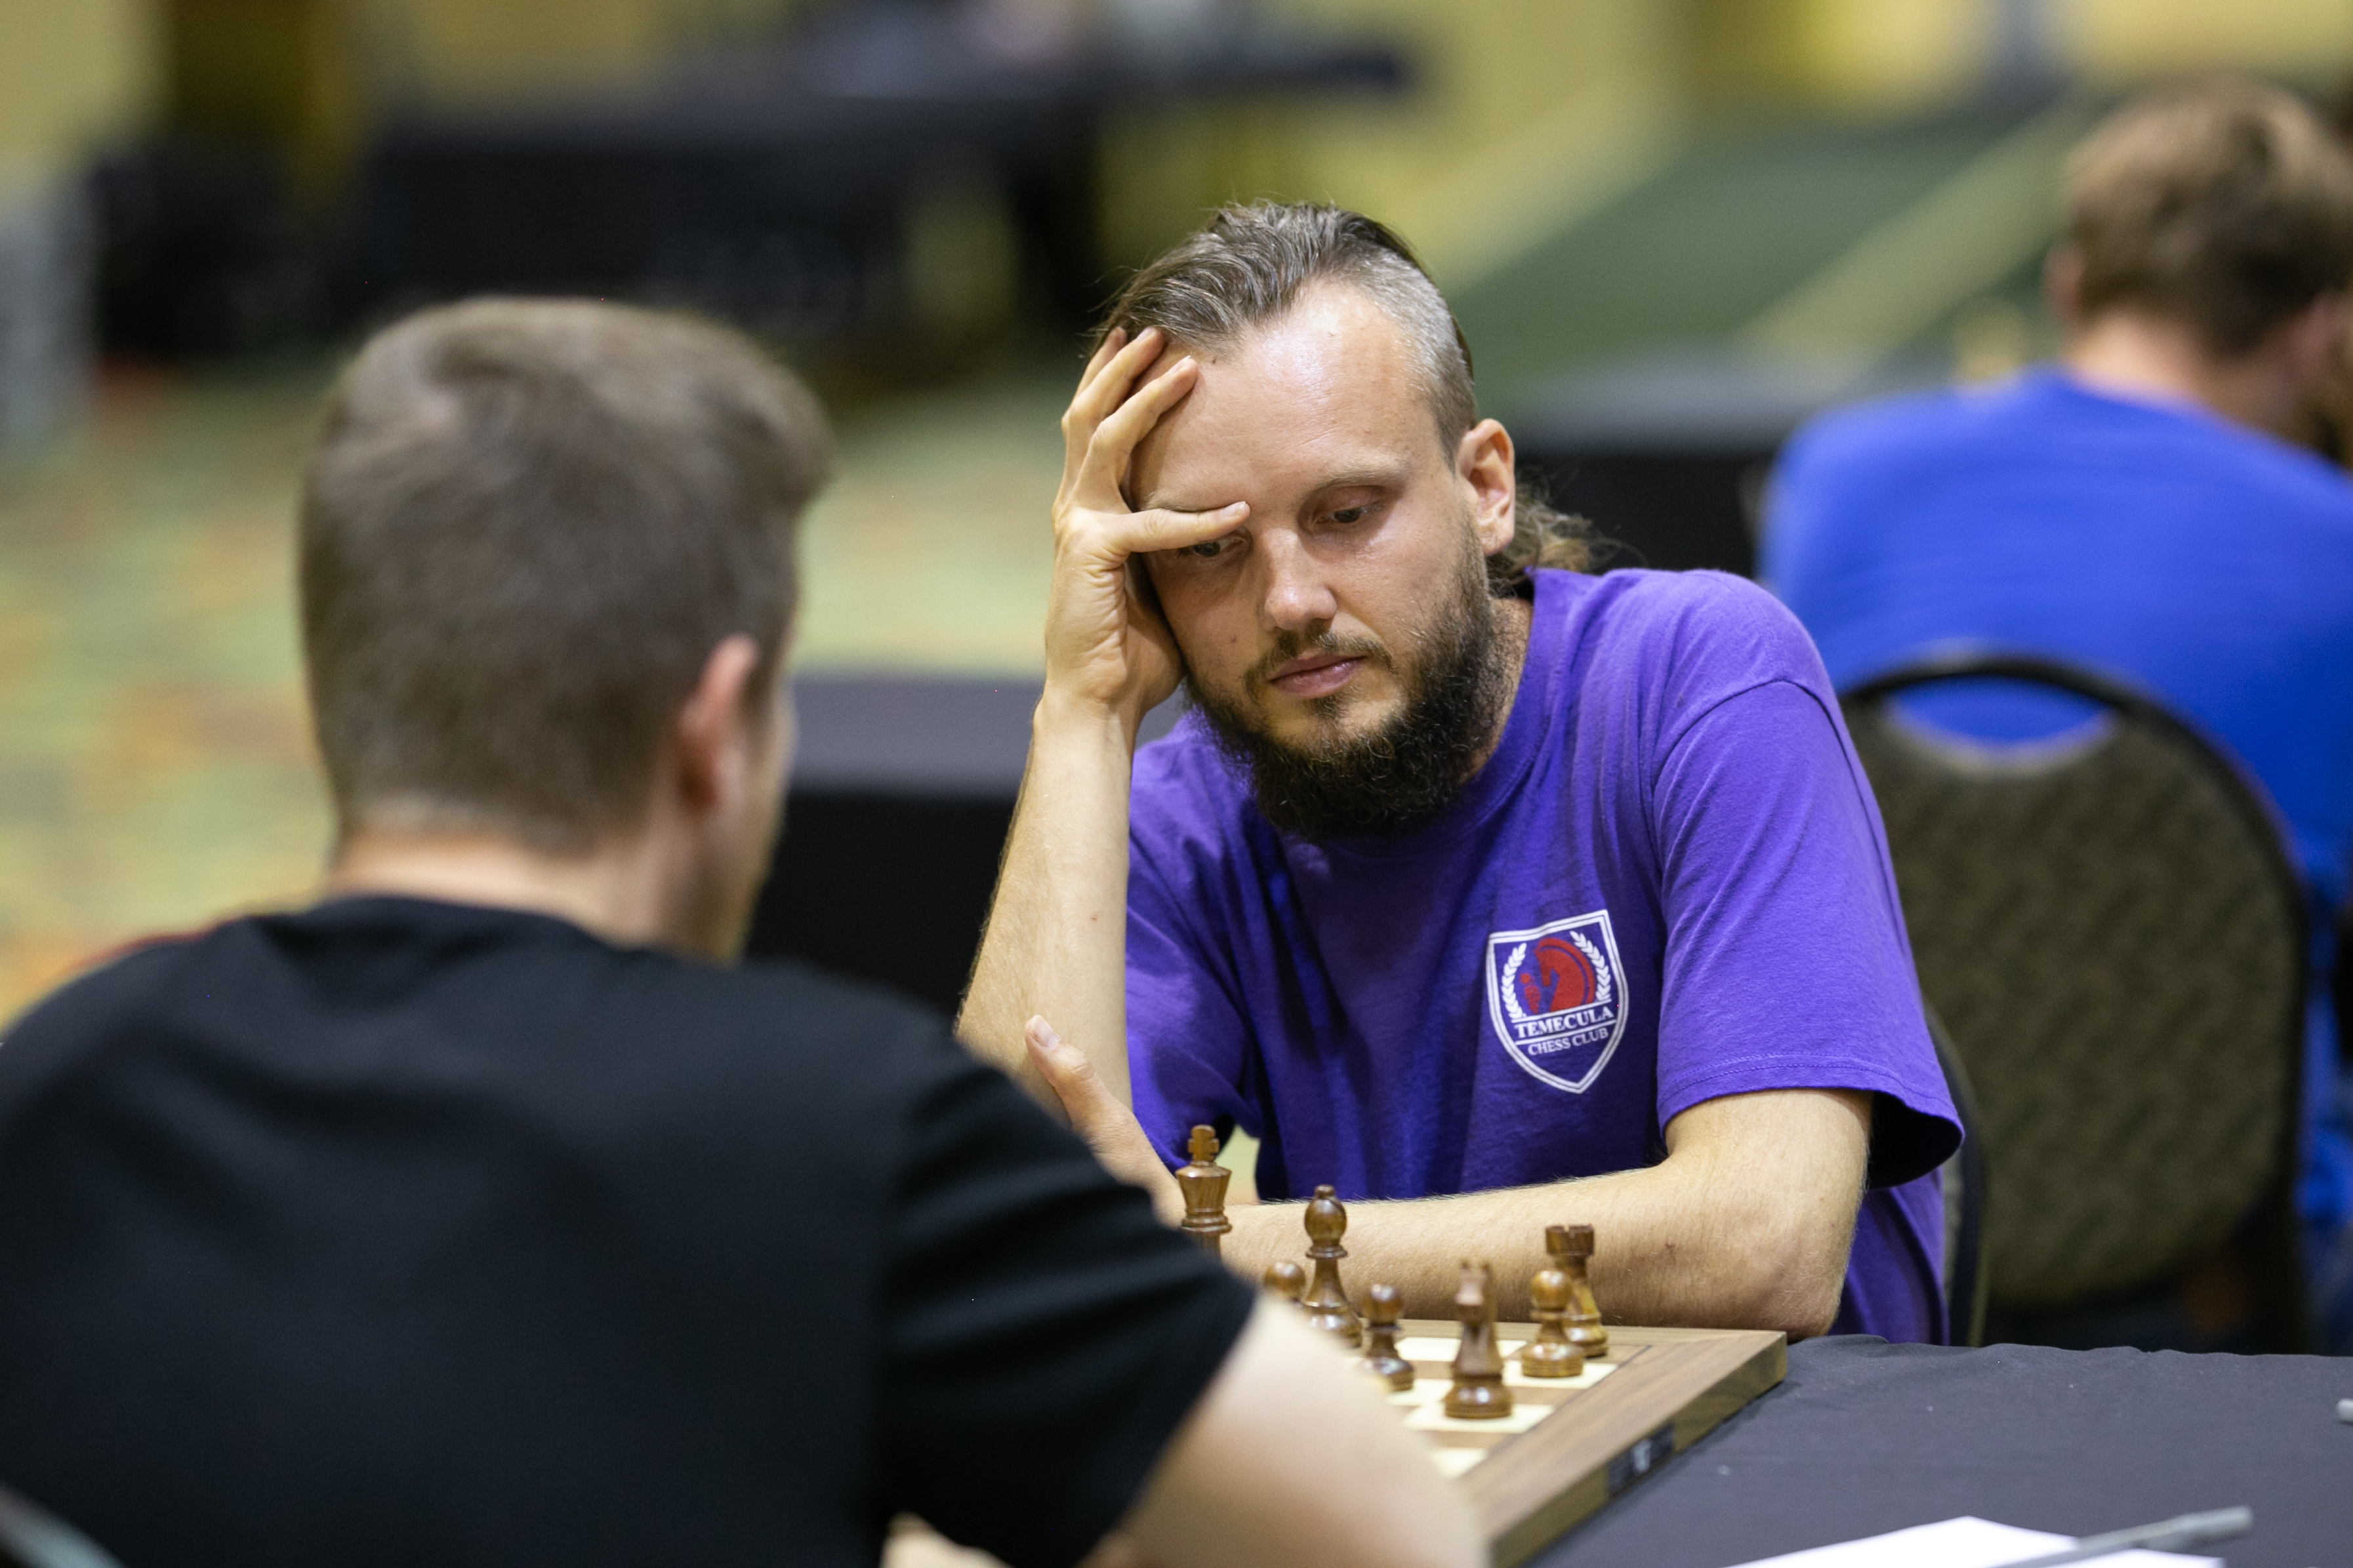 Chess grandmaster Timur Gareyev playing a 10 person blindfold